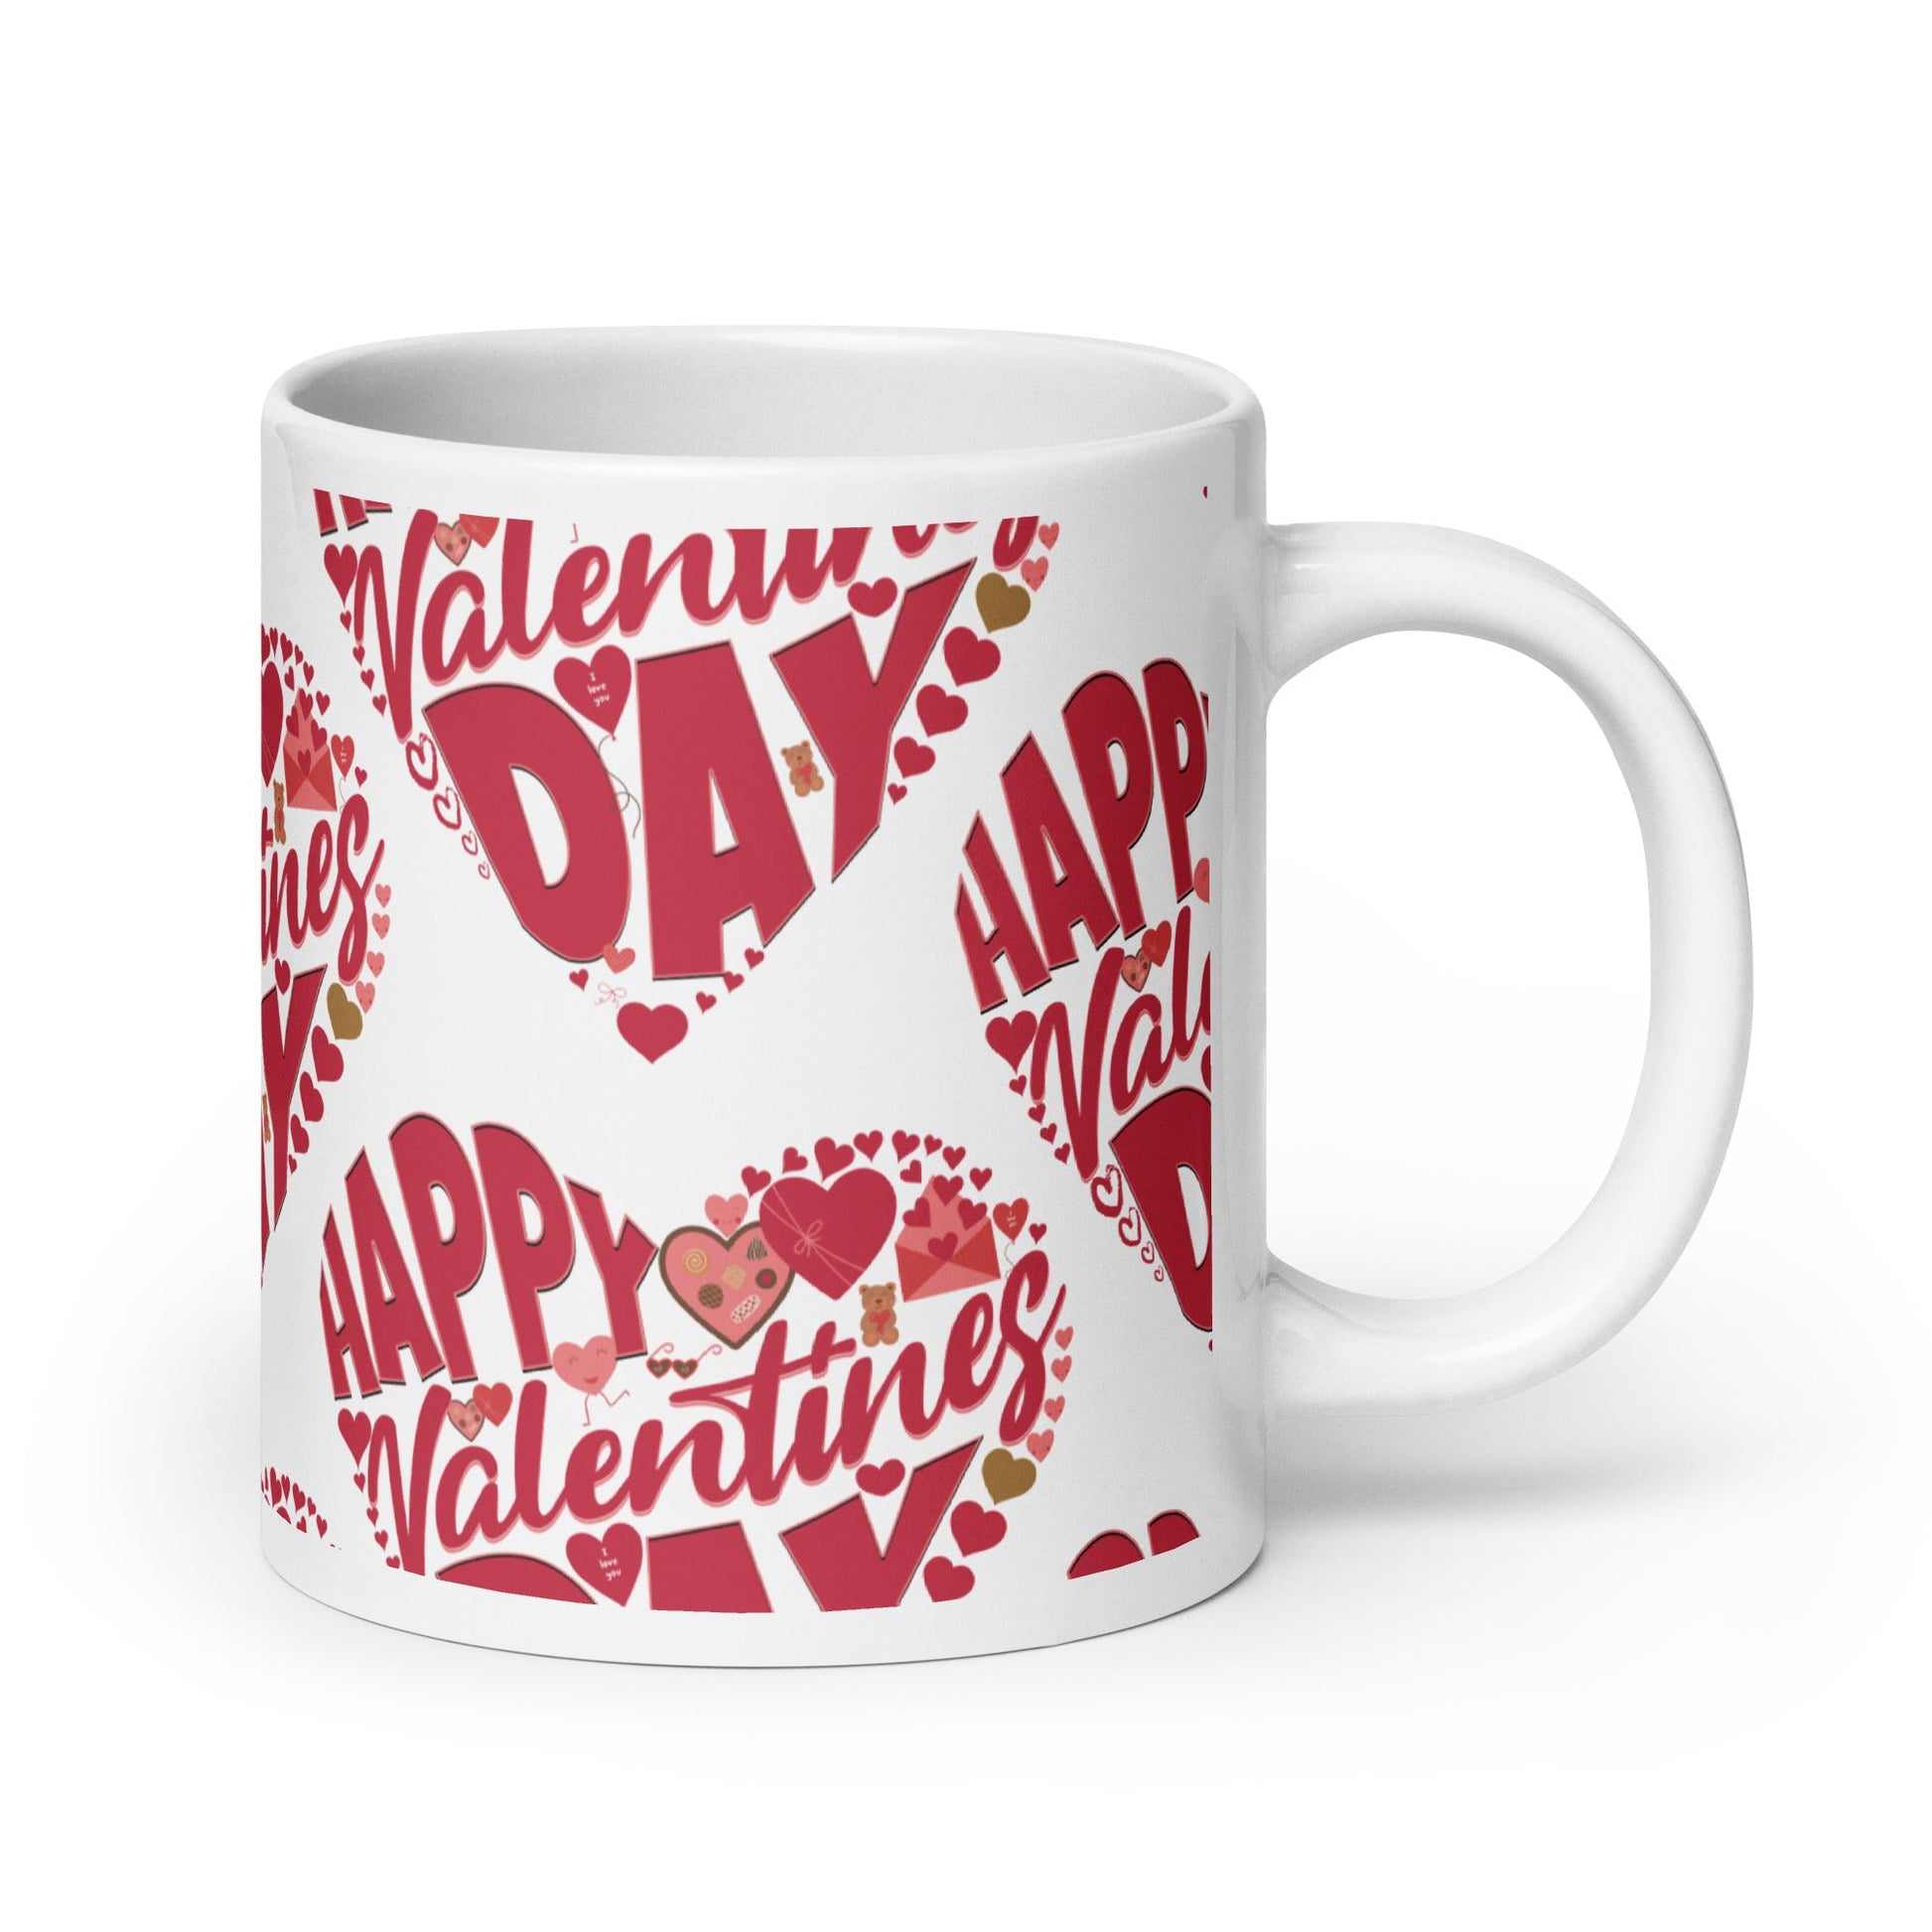 Happy Valentine's Day - White glossy mug - Premium  from T&L Kustoms - Just $12.95! Shop now at T&L Kustoms